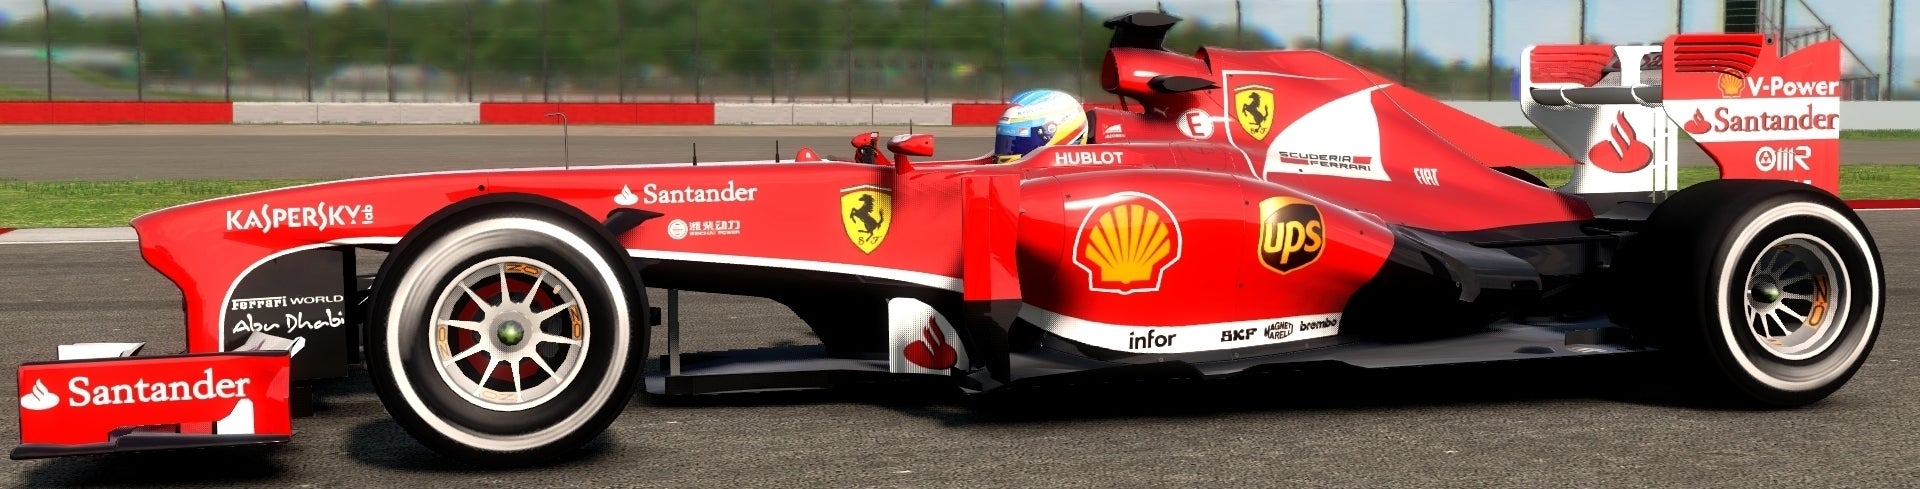 Imagen para Análisis de F1 2013